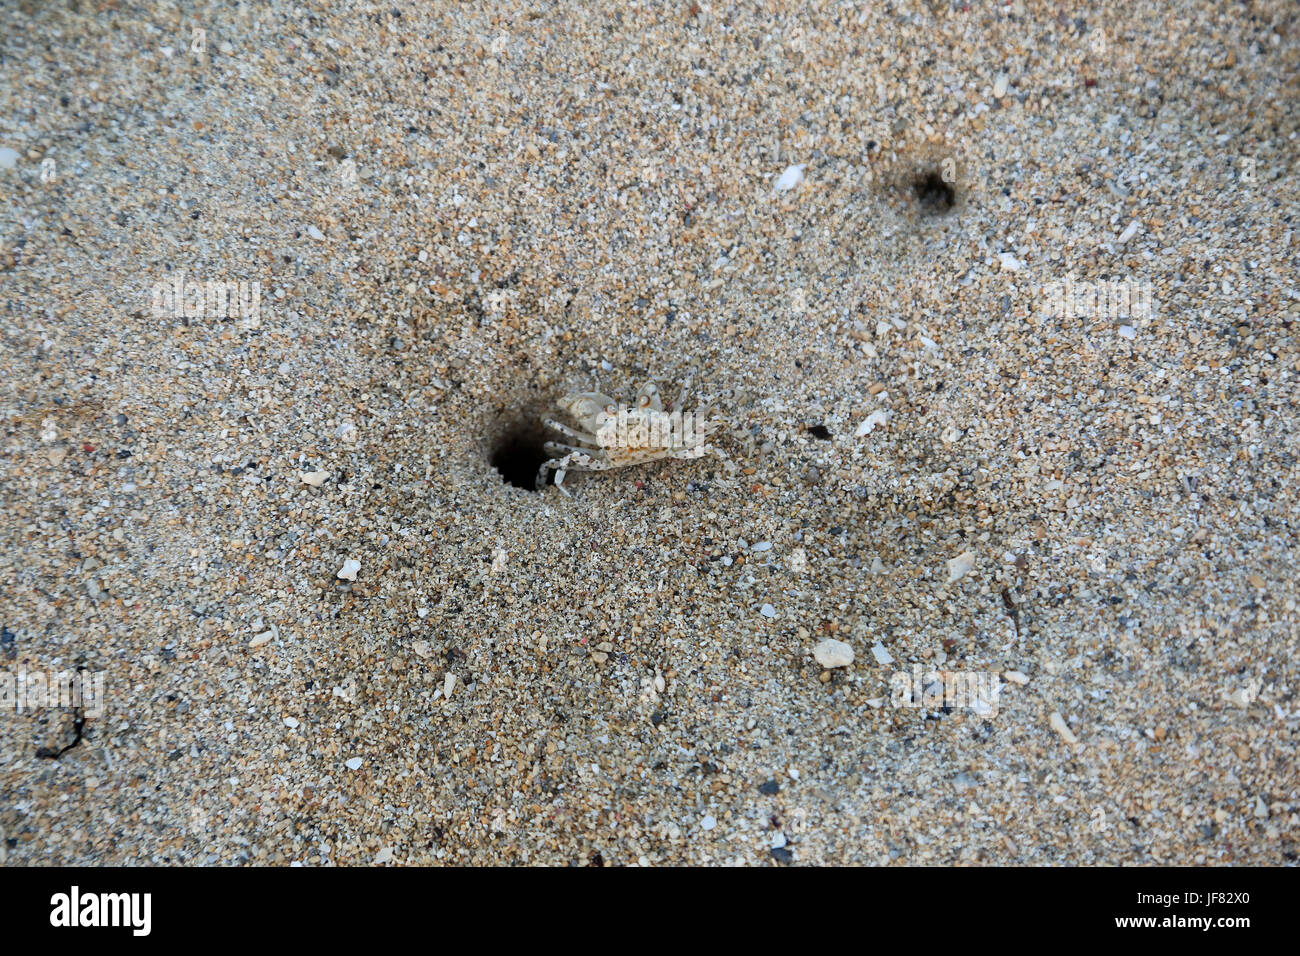 Ghost crab, Ocypode Stock Photo